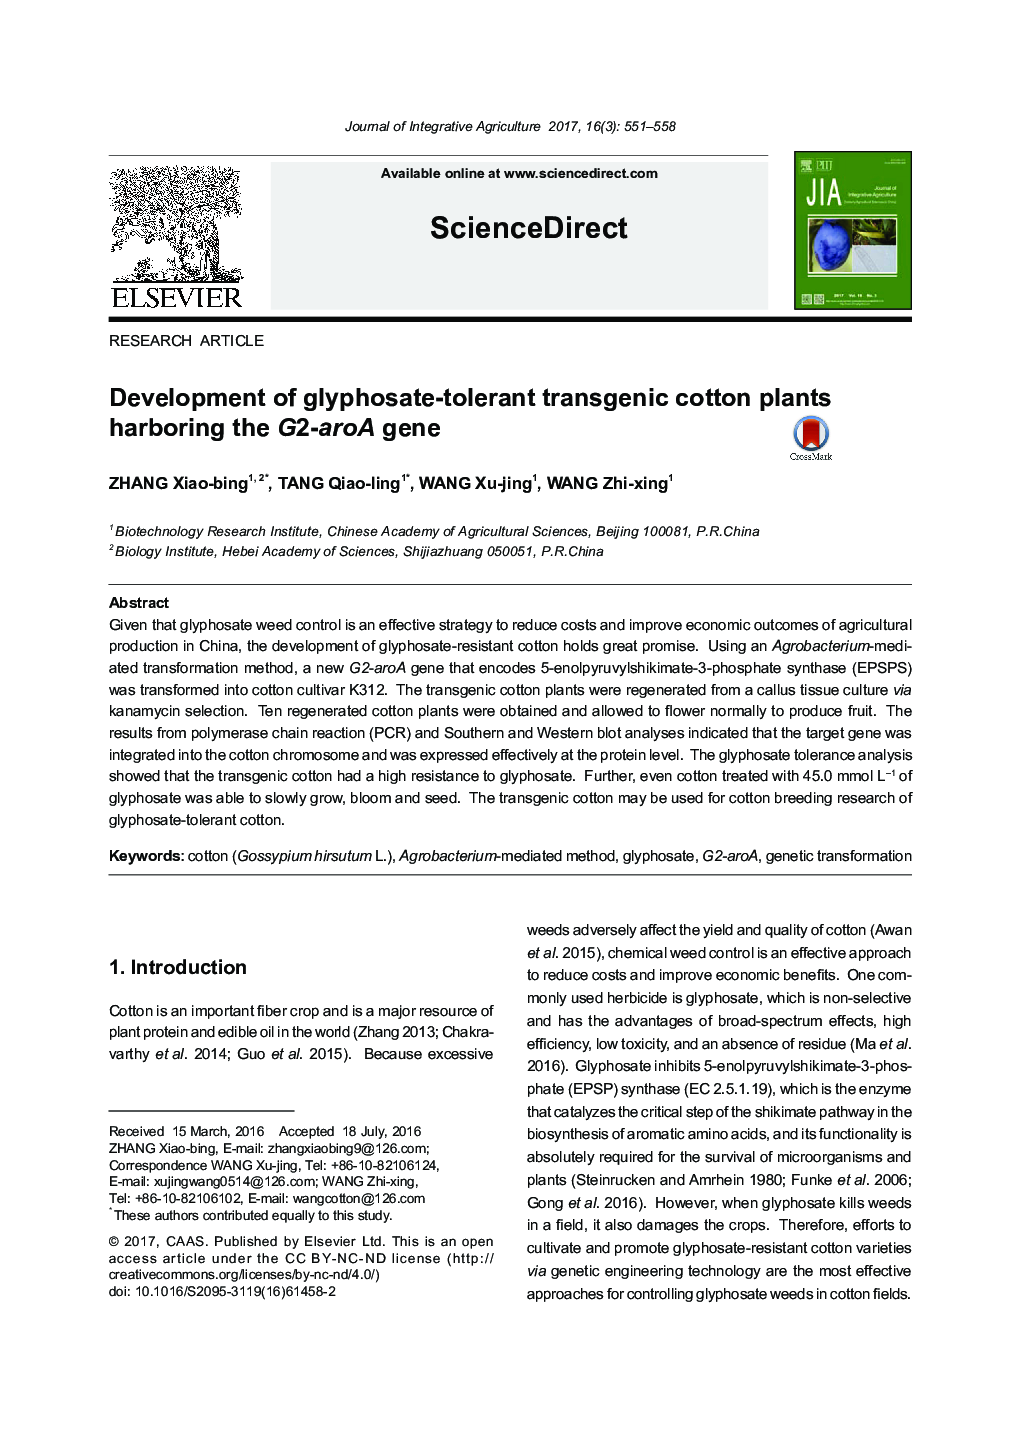 Development of glyphosate-tolerant transgenic cotton plants harboring the G2-aroA gene